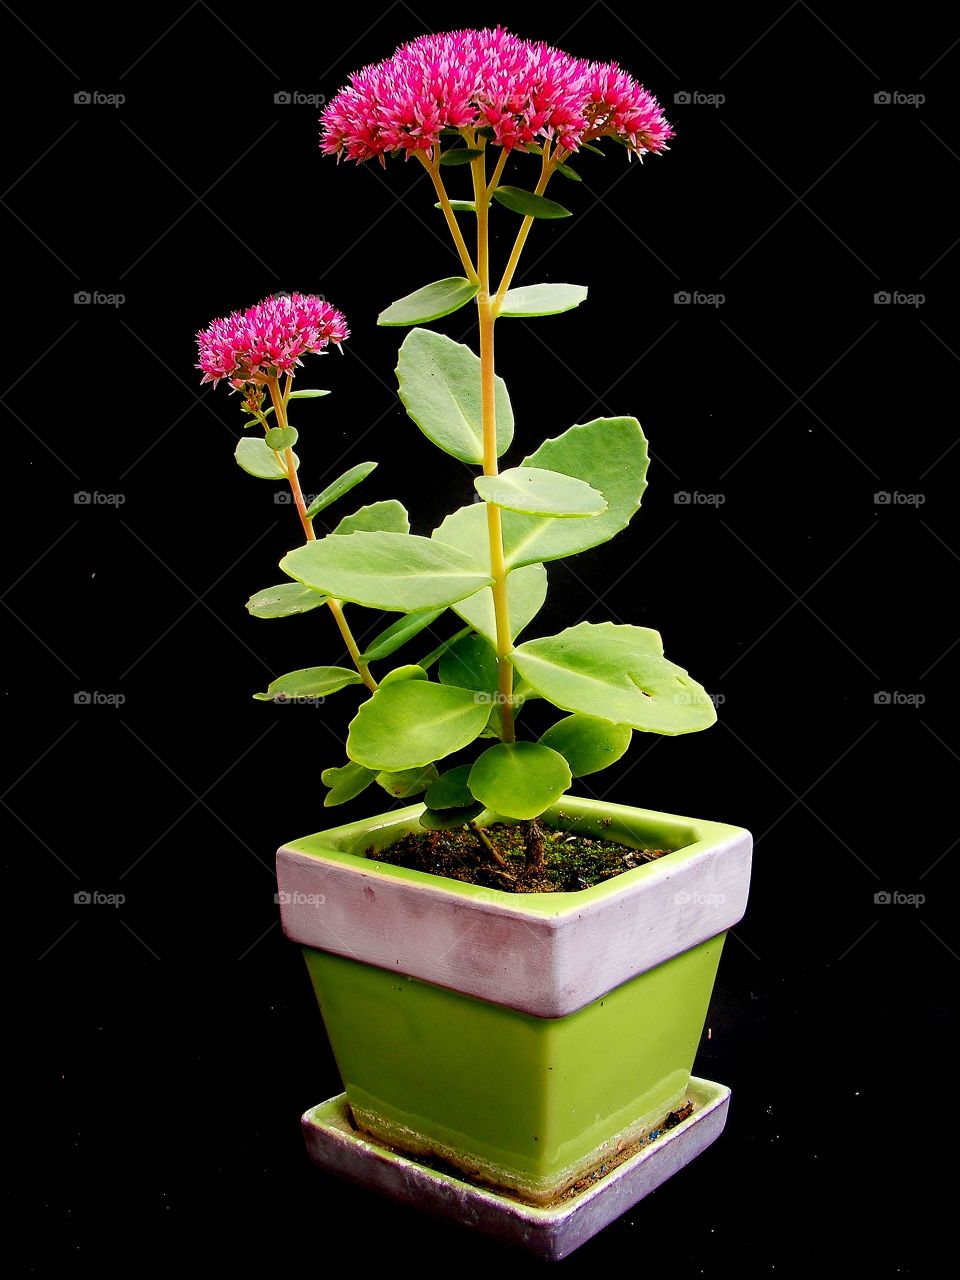 Hot pink flower in green pot